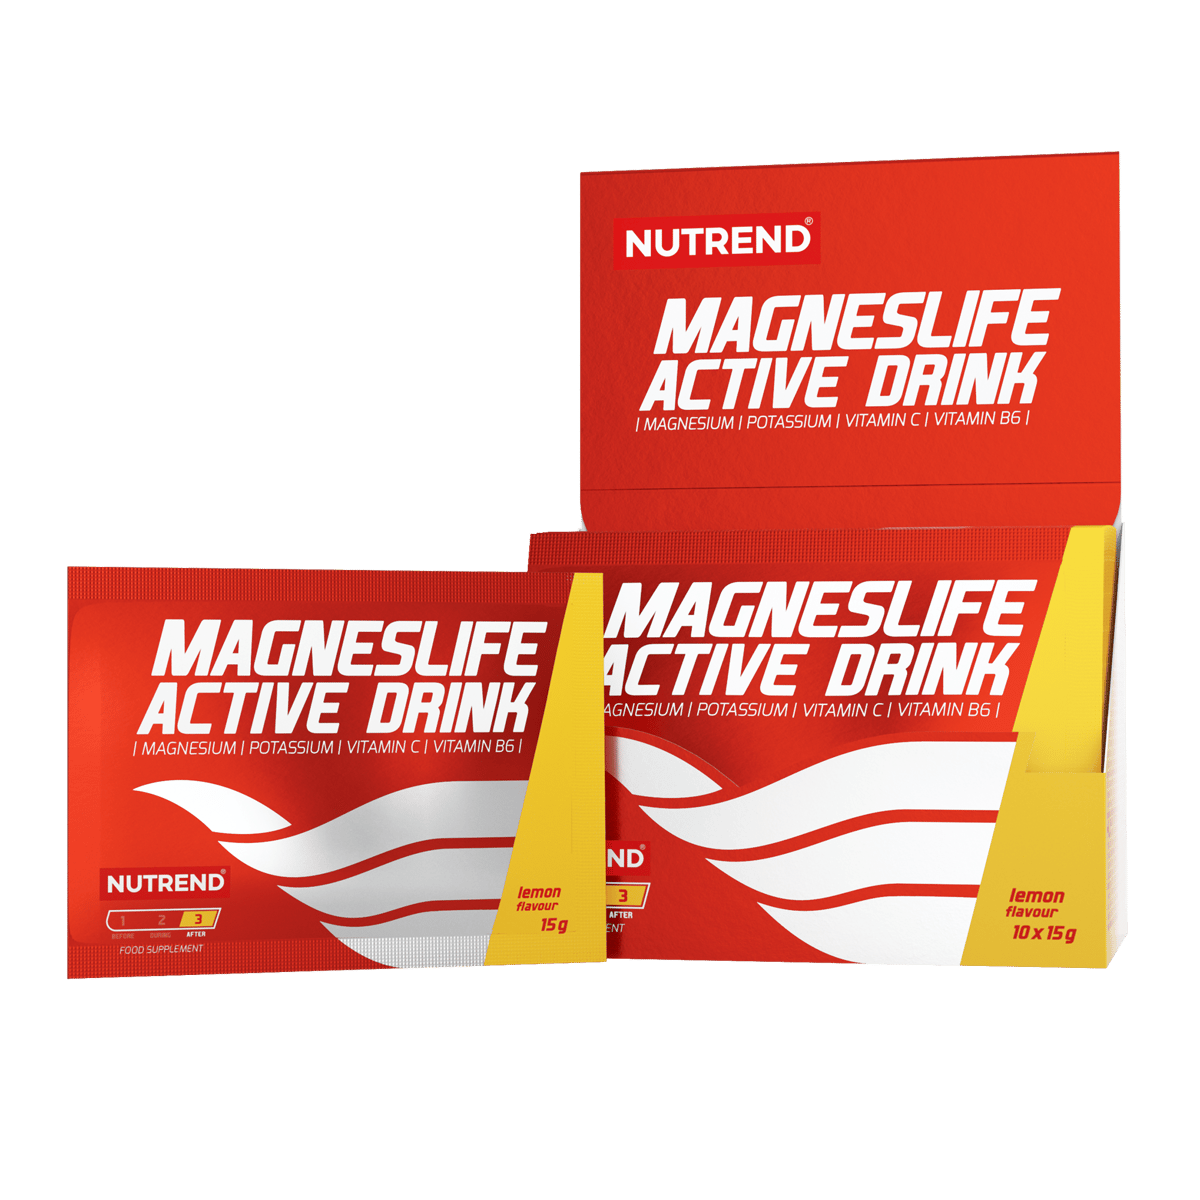 Magneslife Active Drink #0